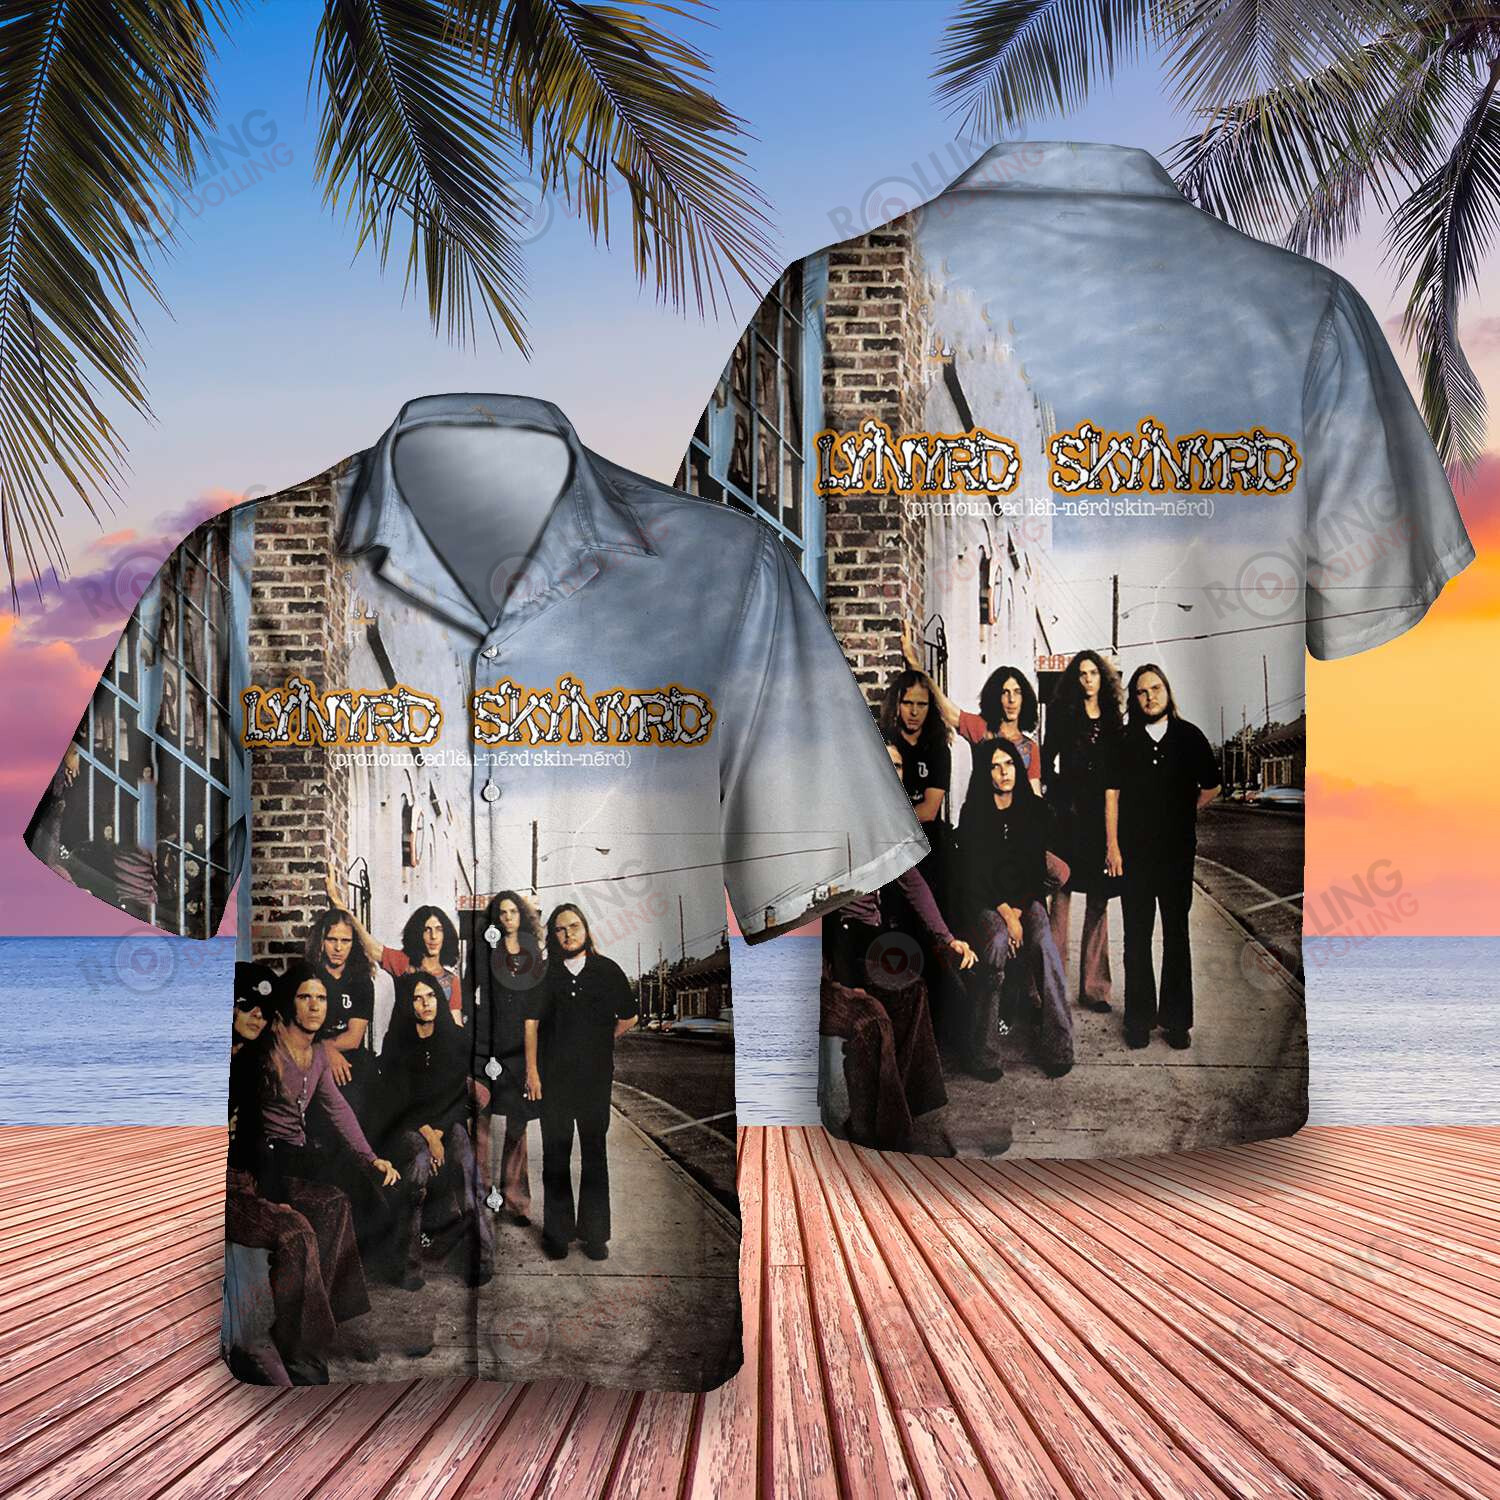 Regardless of their style, you will feel comfortable wearing Hawaiian Shirt 93